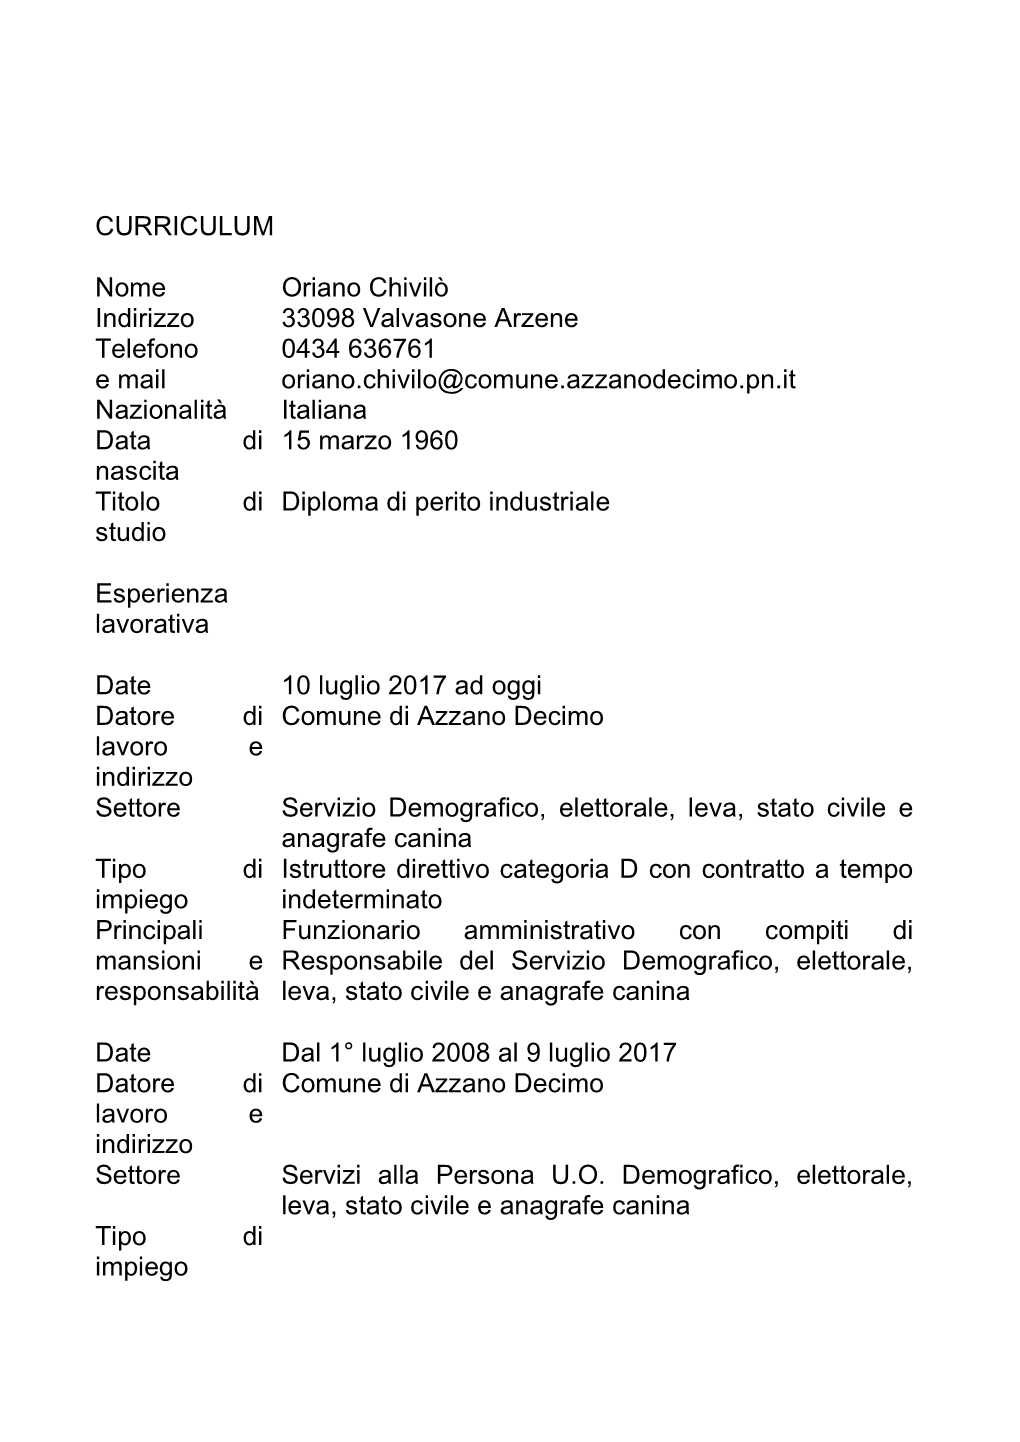 CURRICULUM Nome Oriano Chivilò Indirizzo 33098 Valvasone Arzene